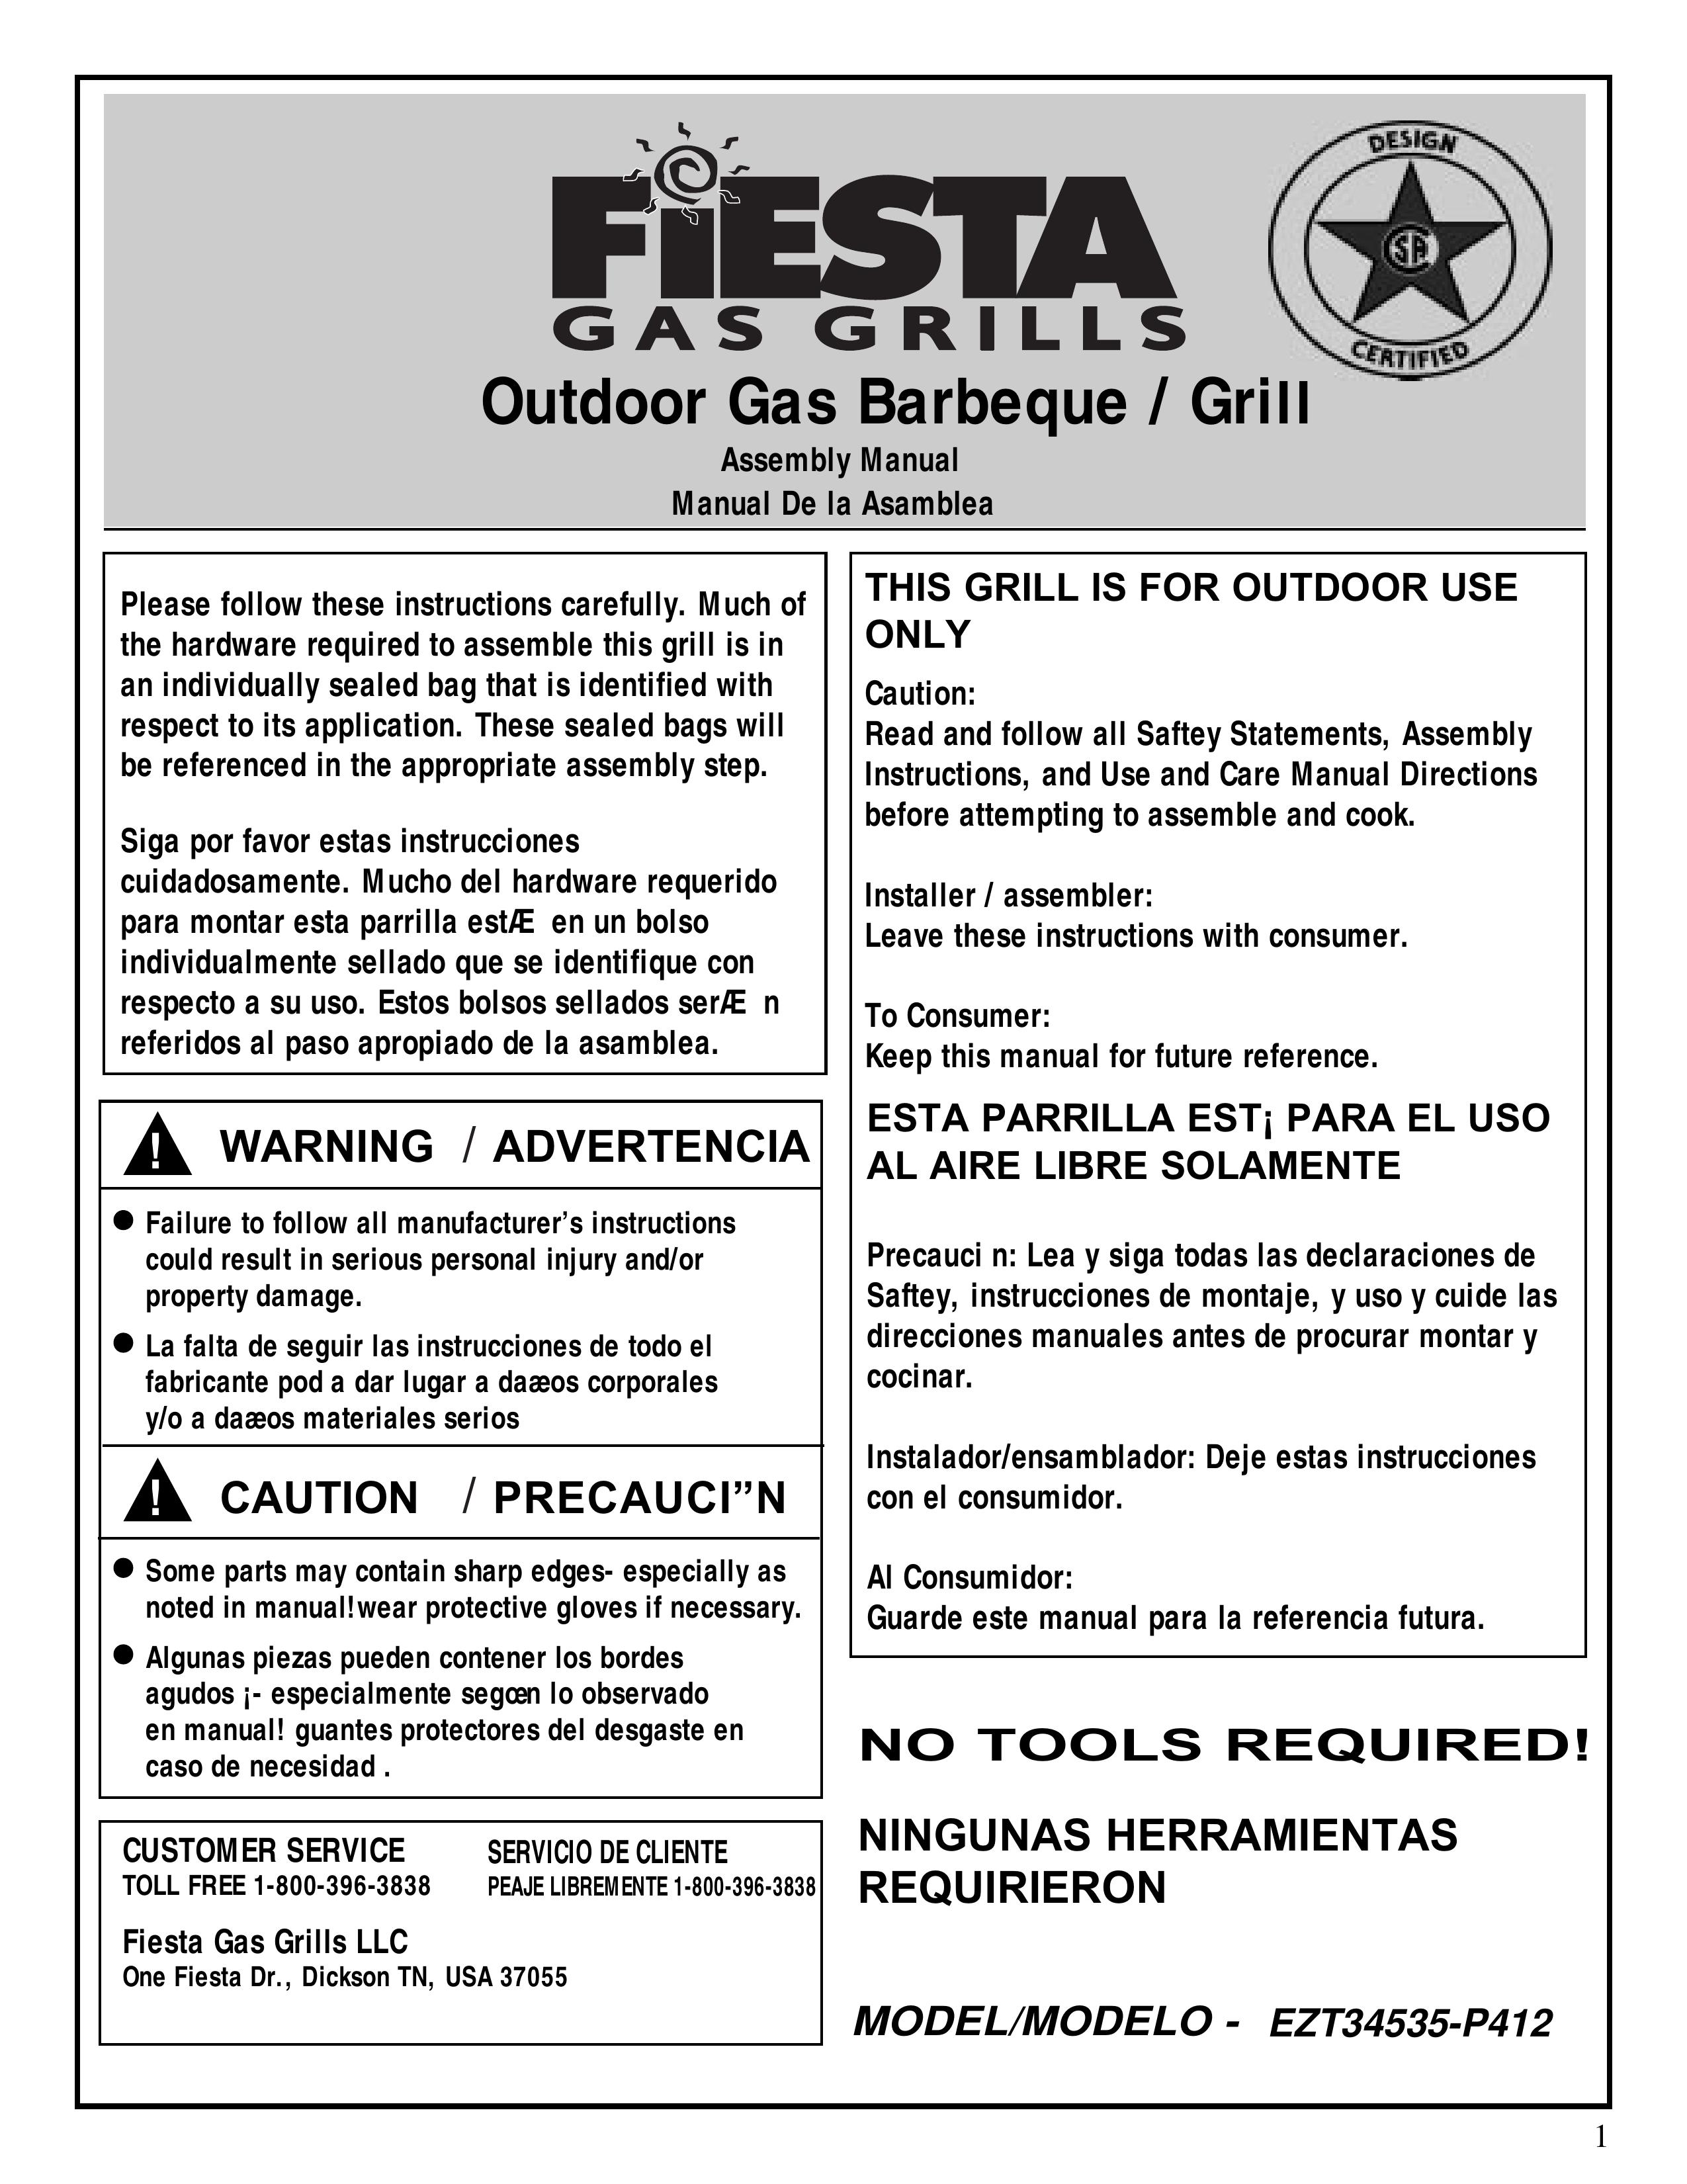 Fiesta EZT34535-P412 Gas Grill User Manual